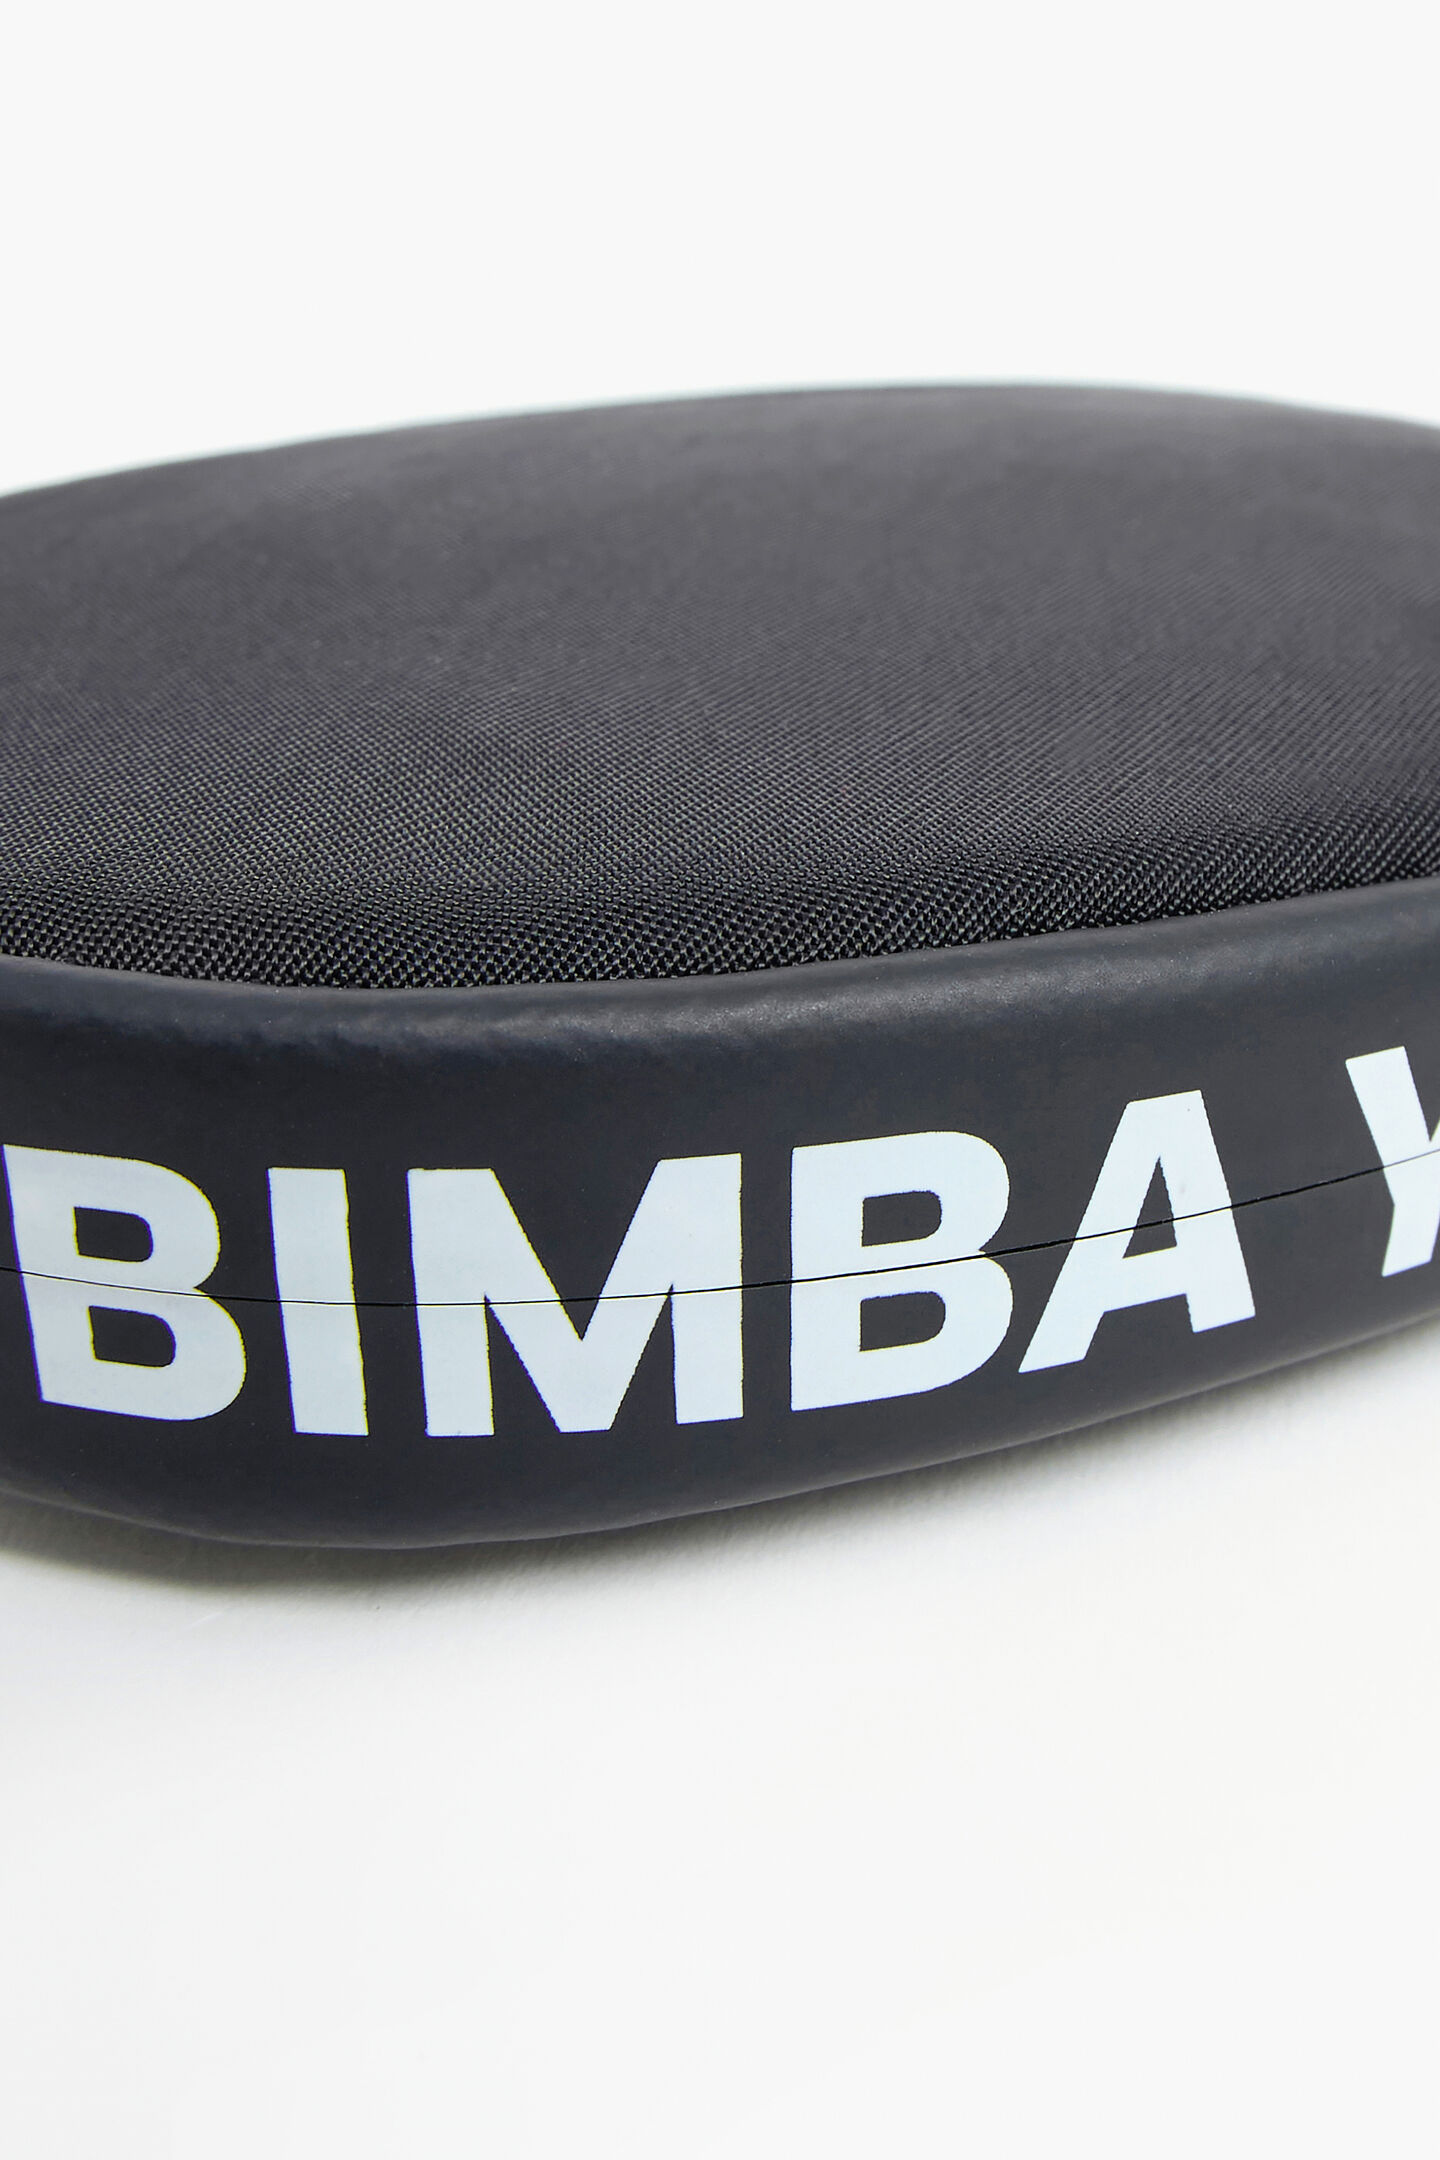 Monedero ovalado nylon negro por 19€ en Bimba y Lola